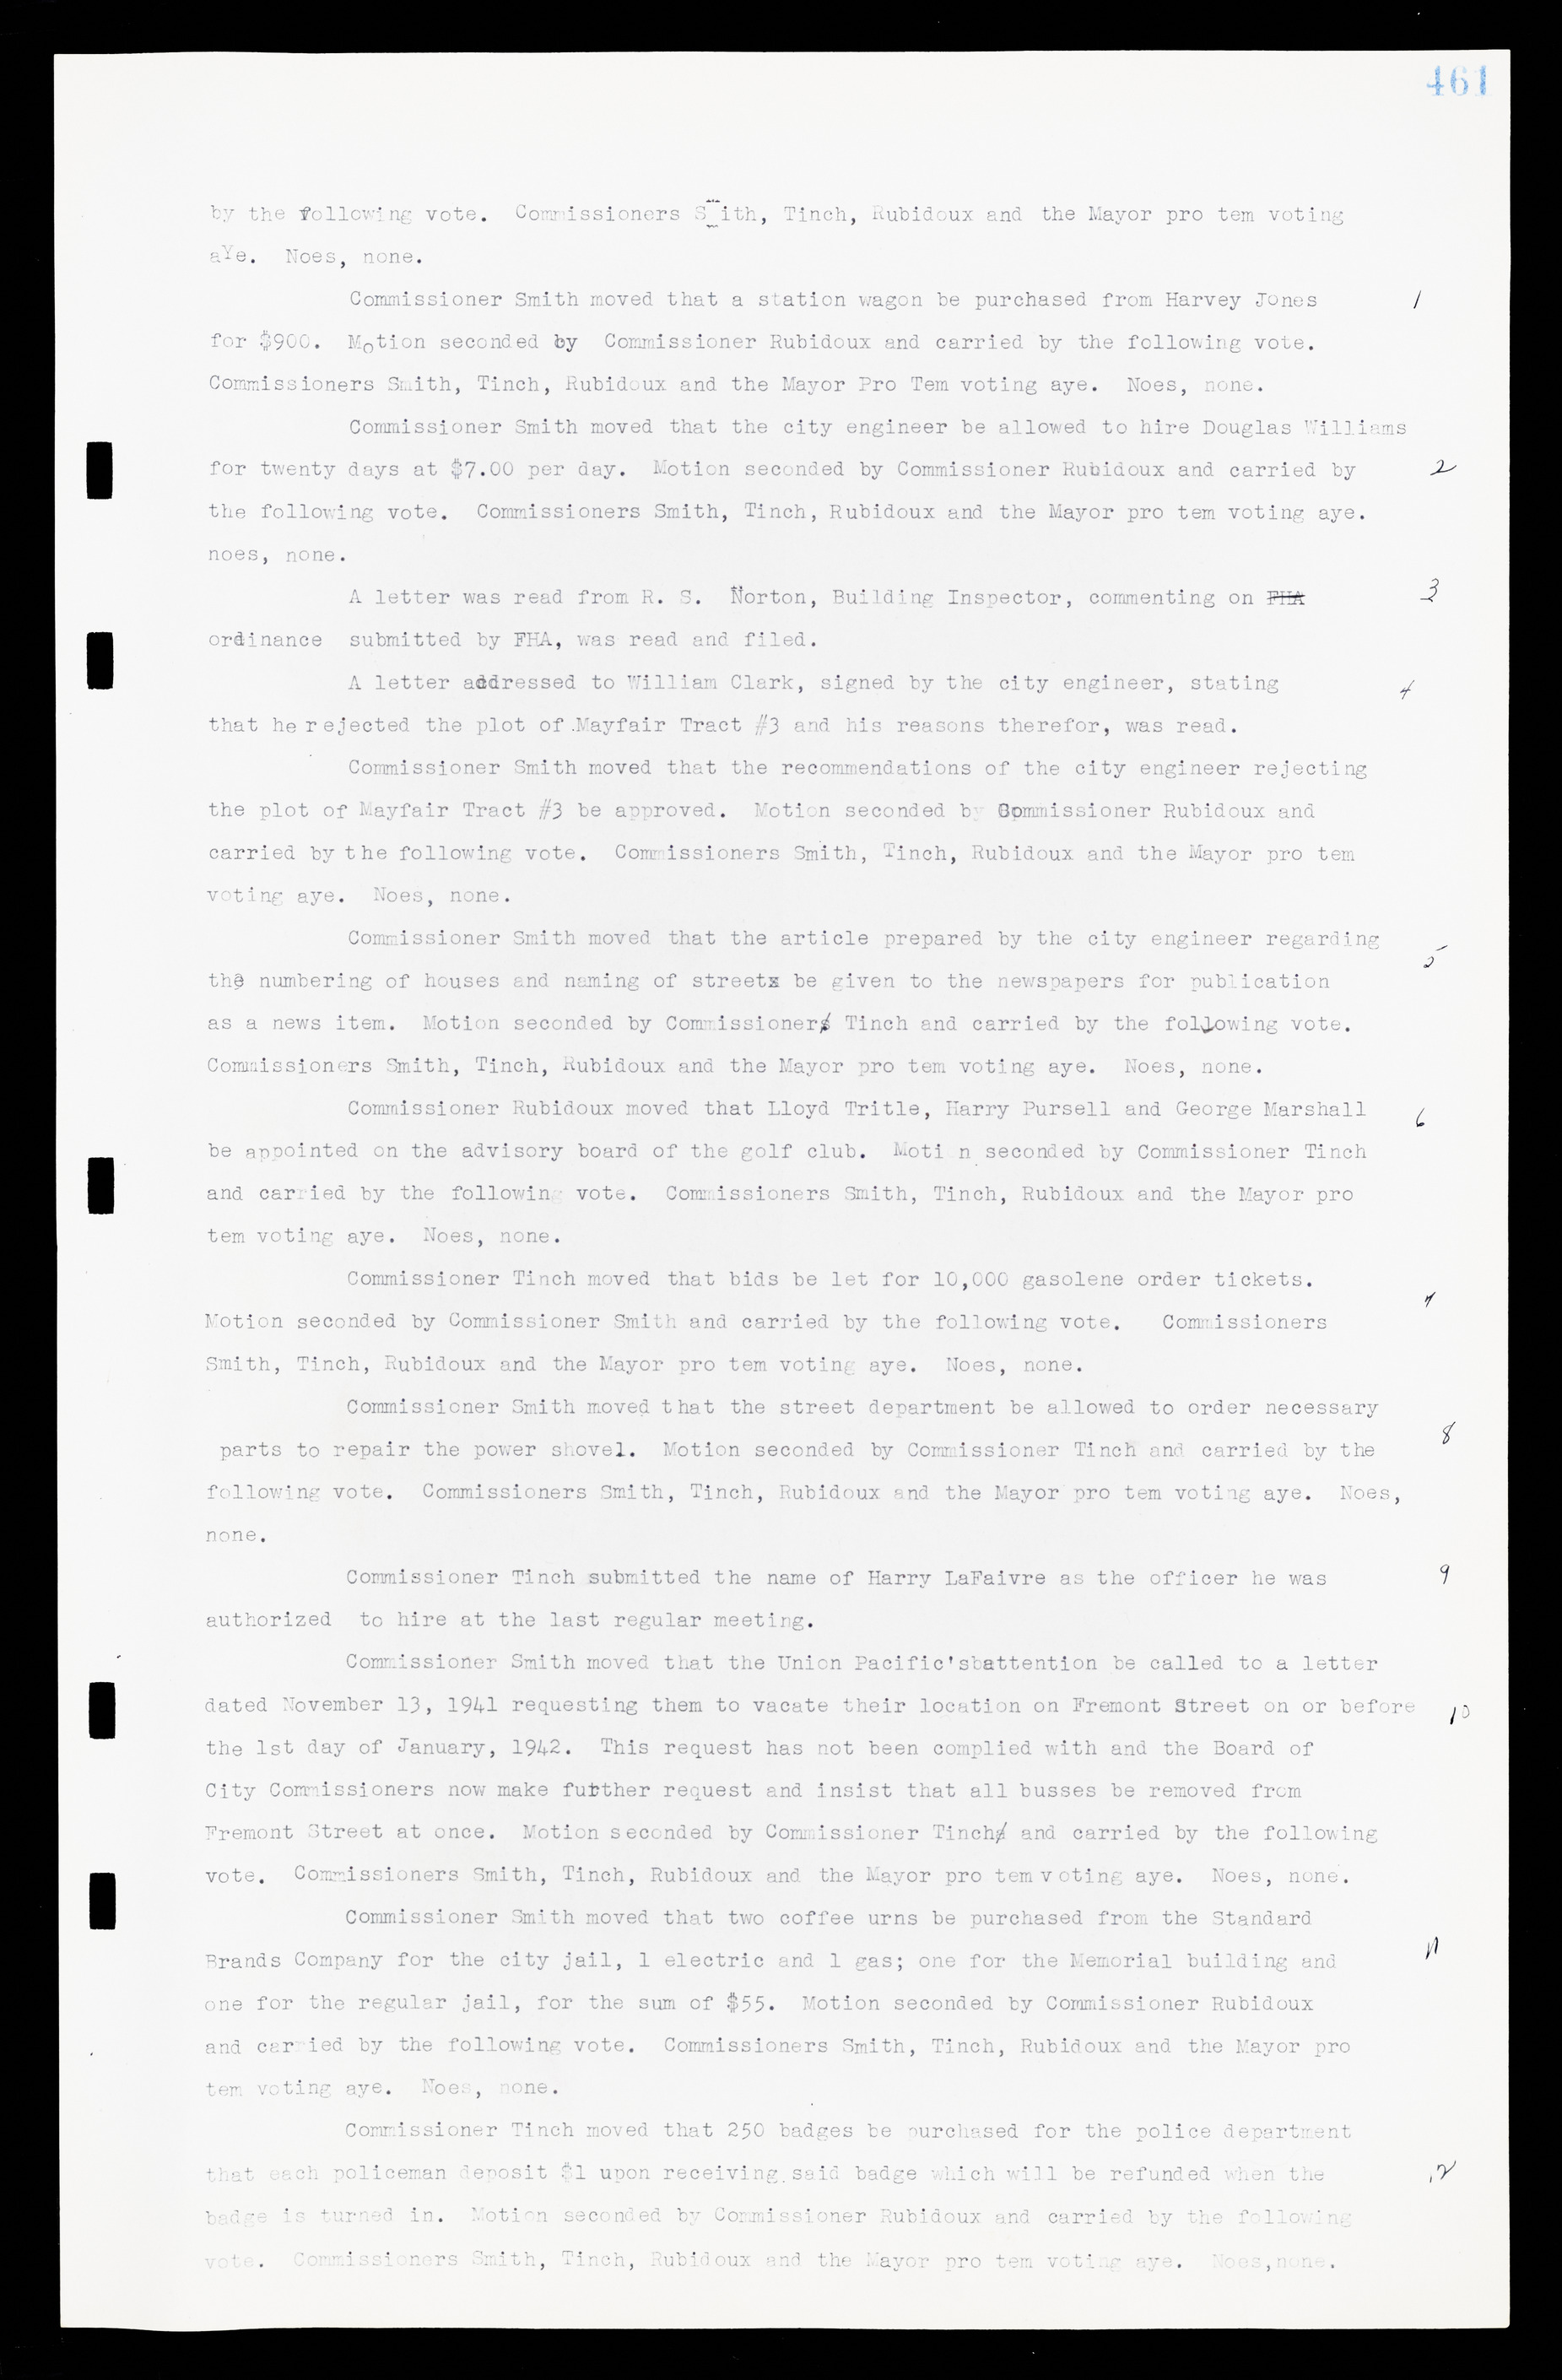 Las Vegas City Commission Minutes, February 17, 1937 to August 4, 1942, lvc000004-489